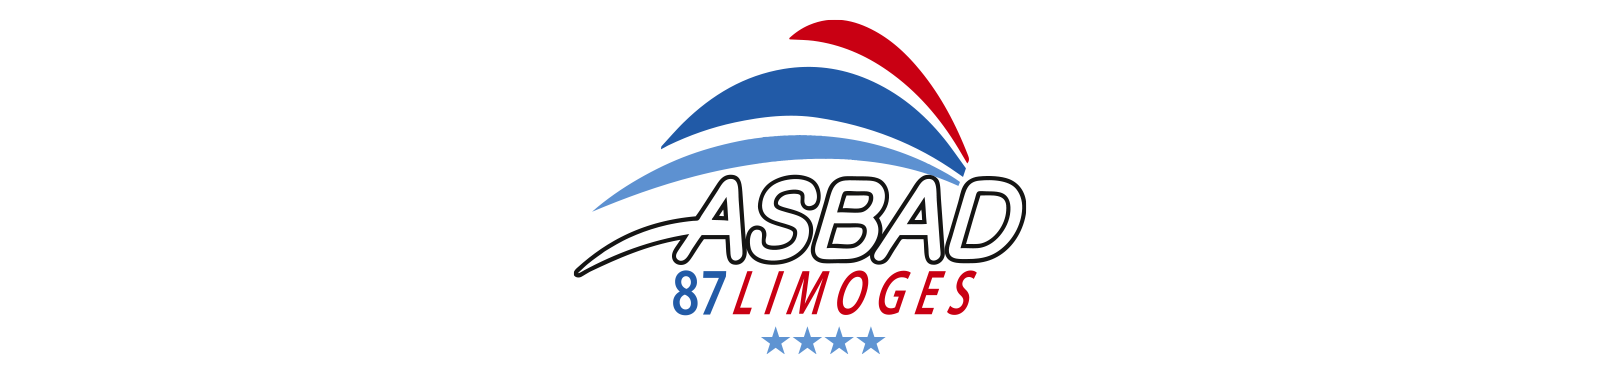 ASBAD Limoges 87